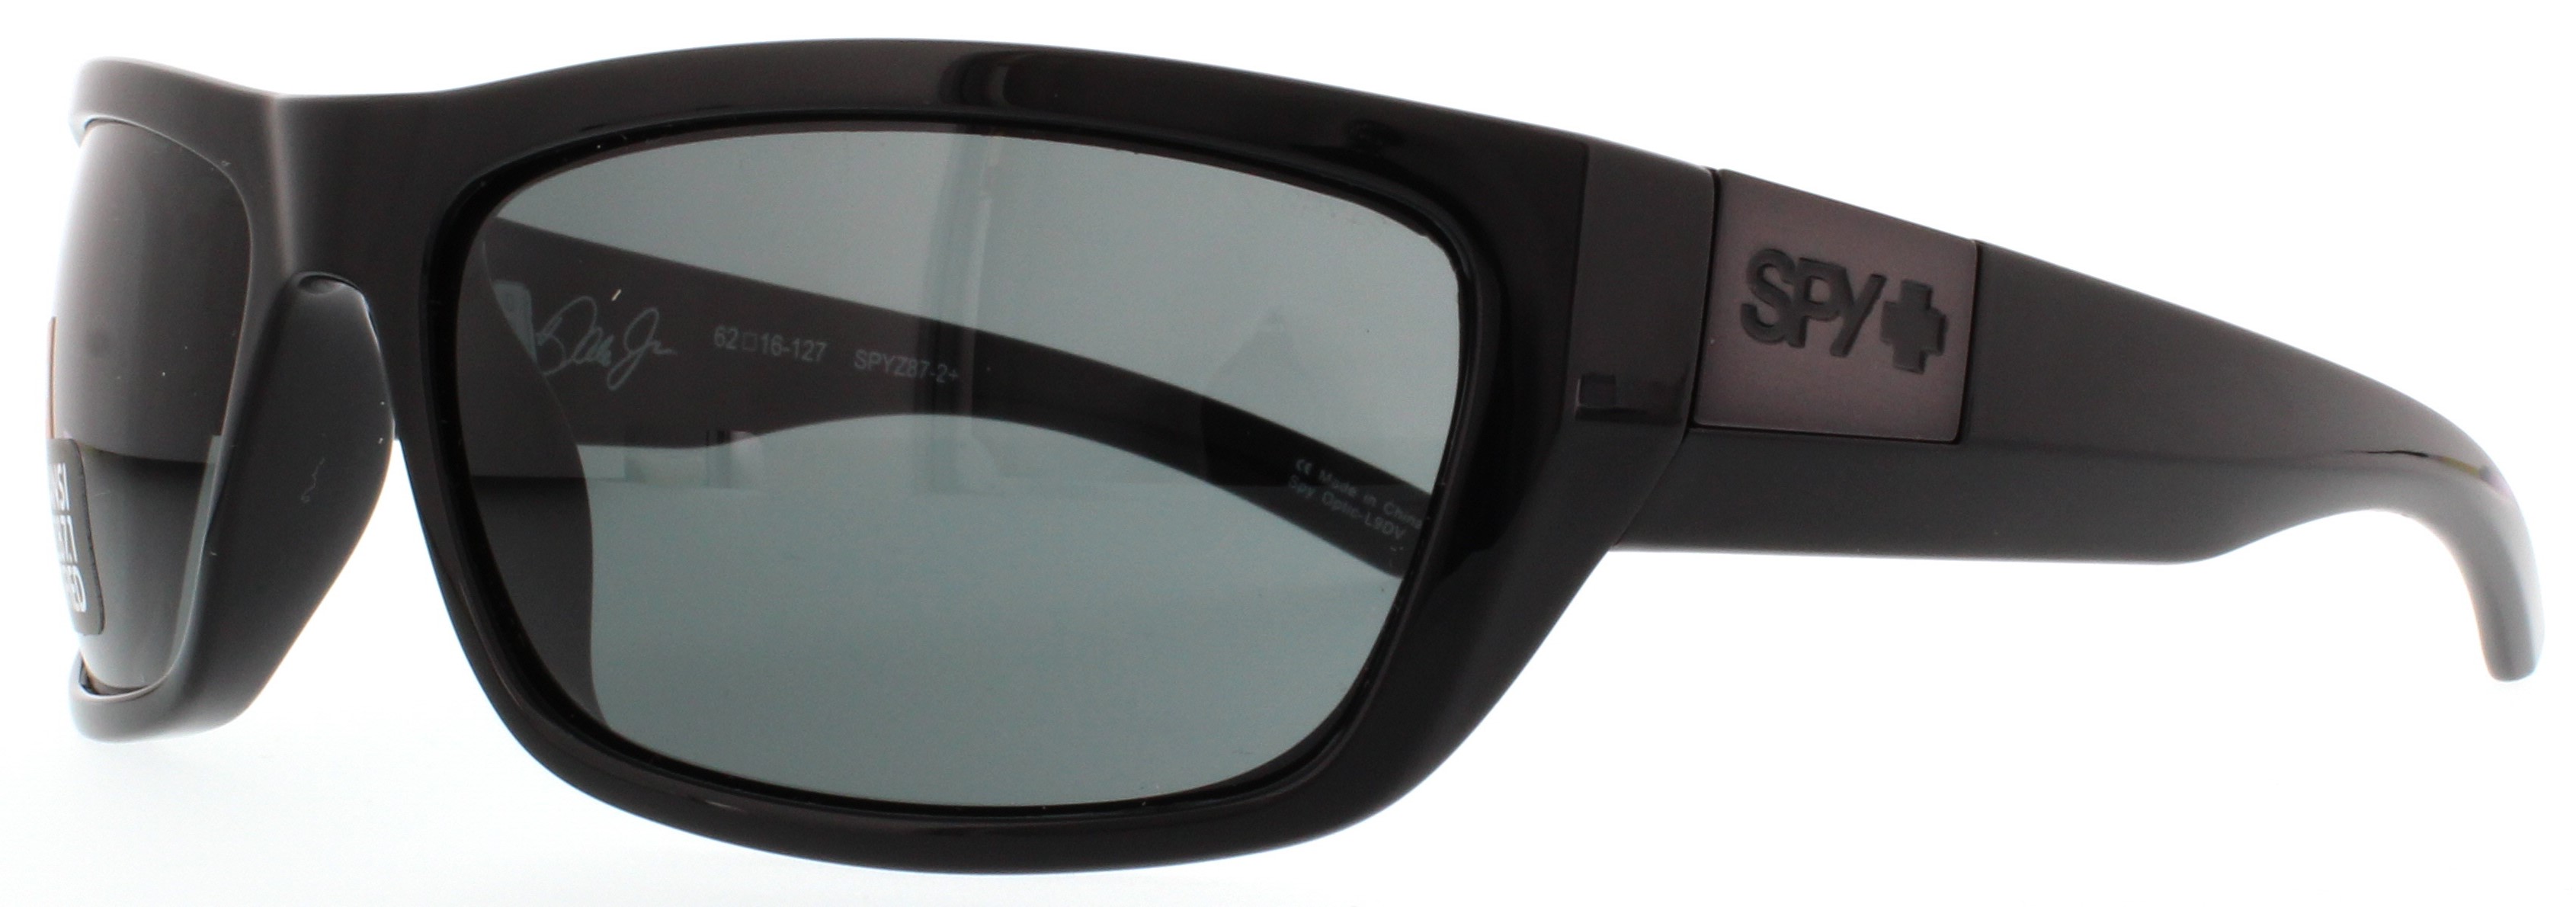 Picture of Spy Sunglasses DEGA